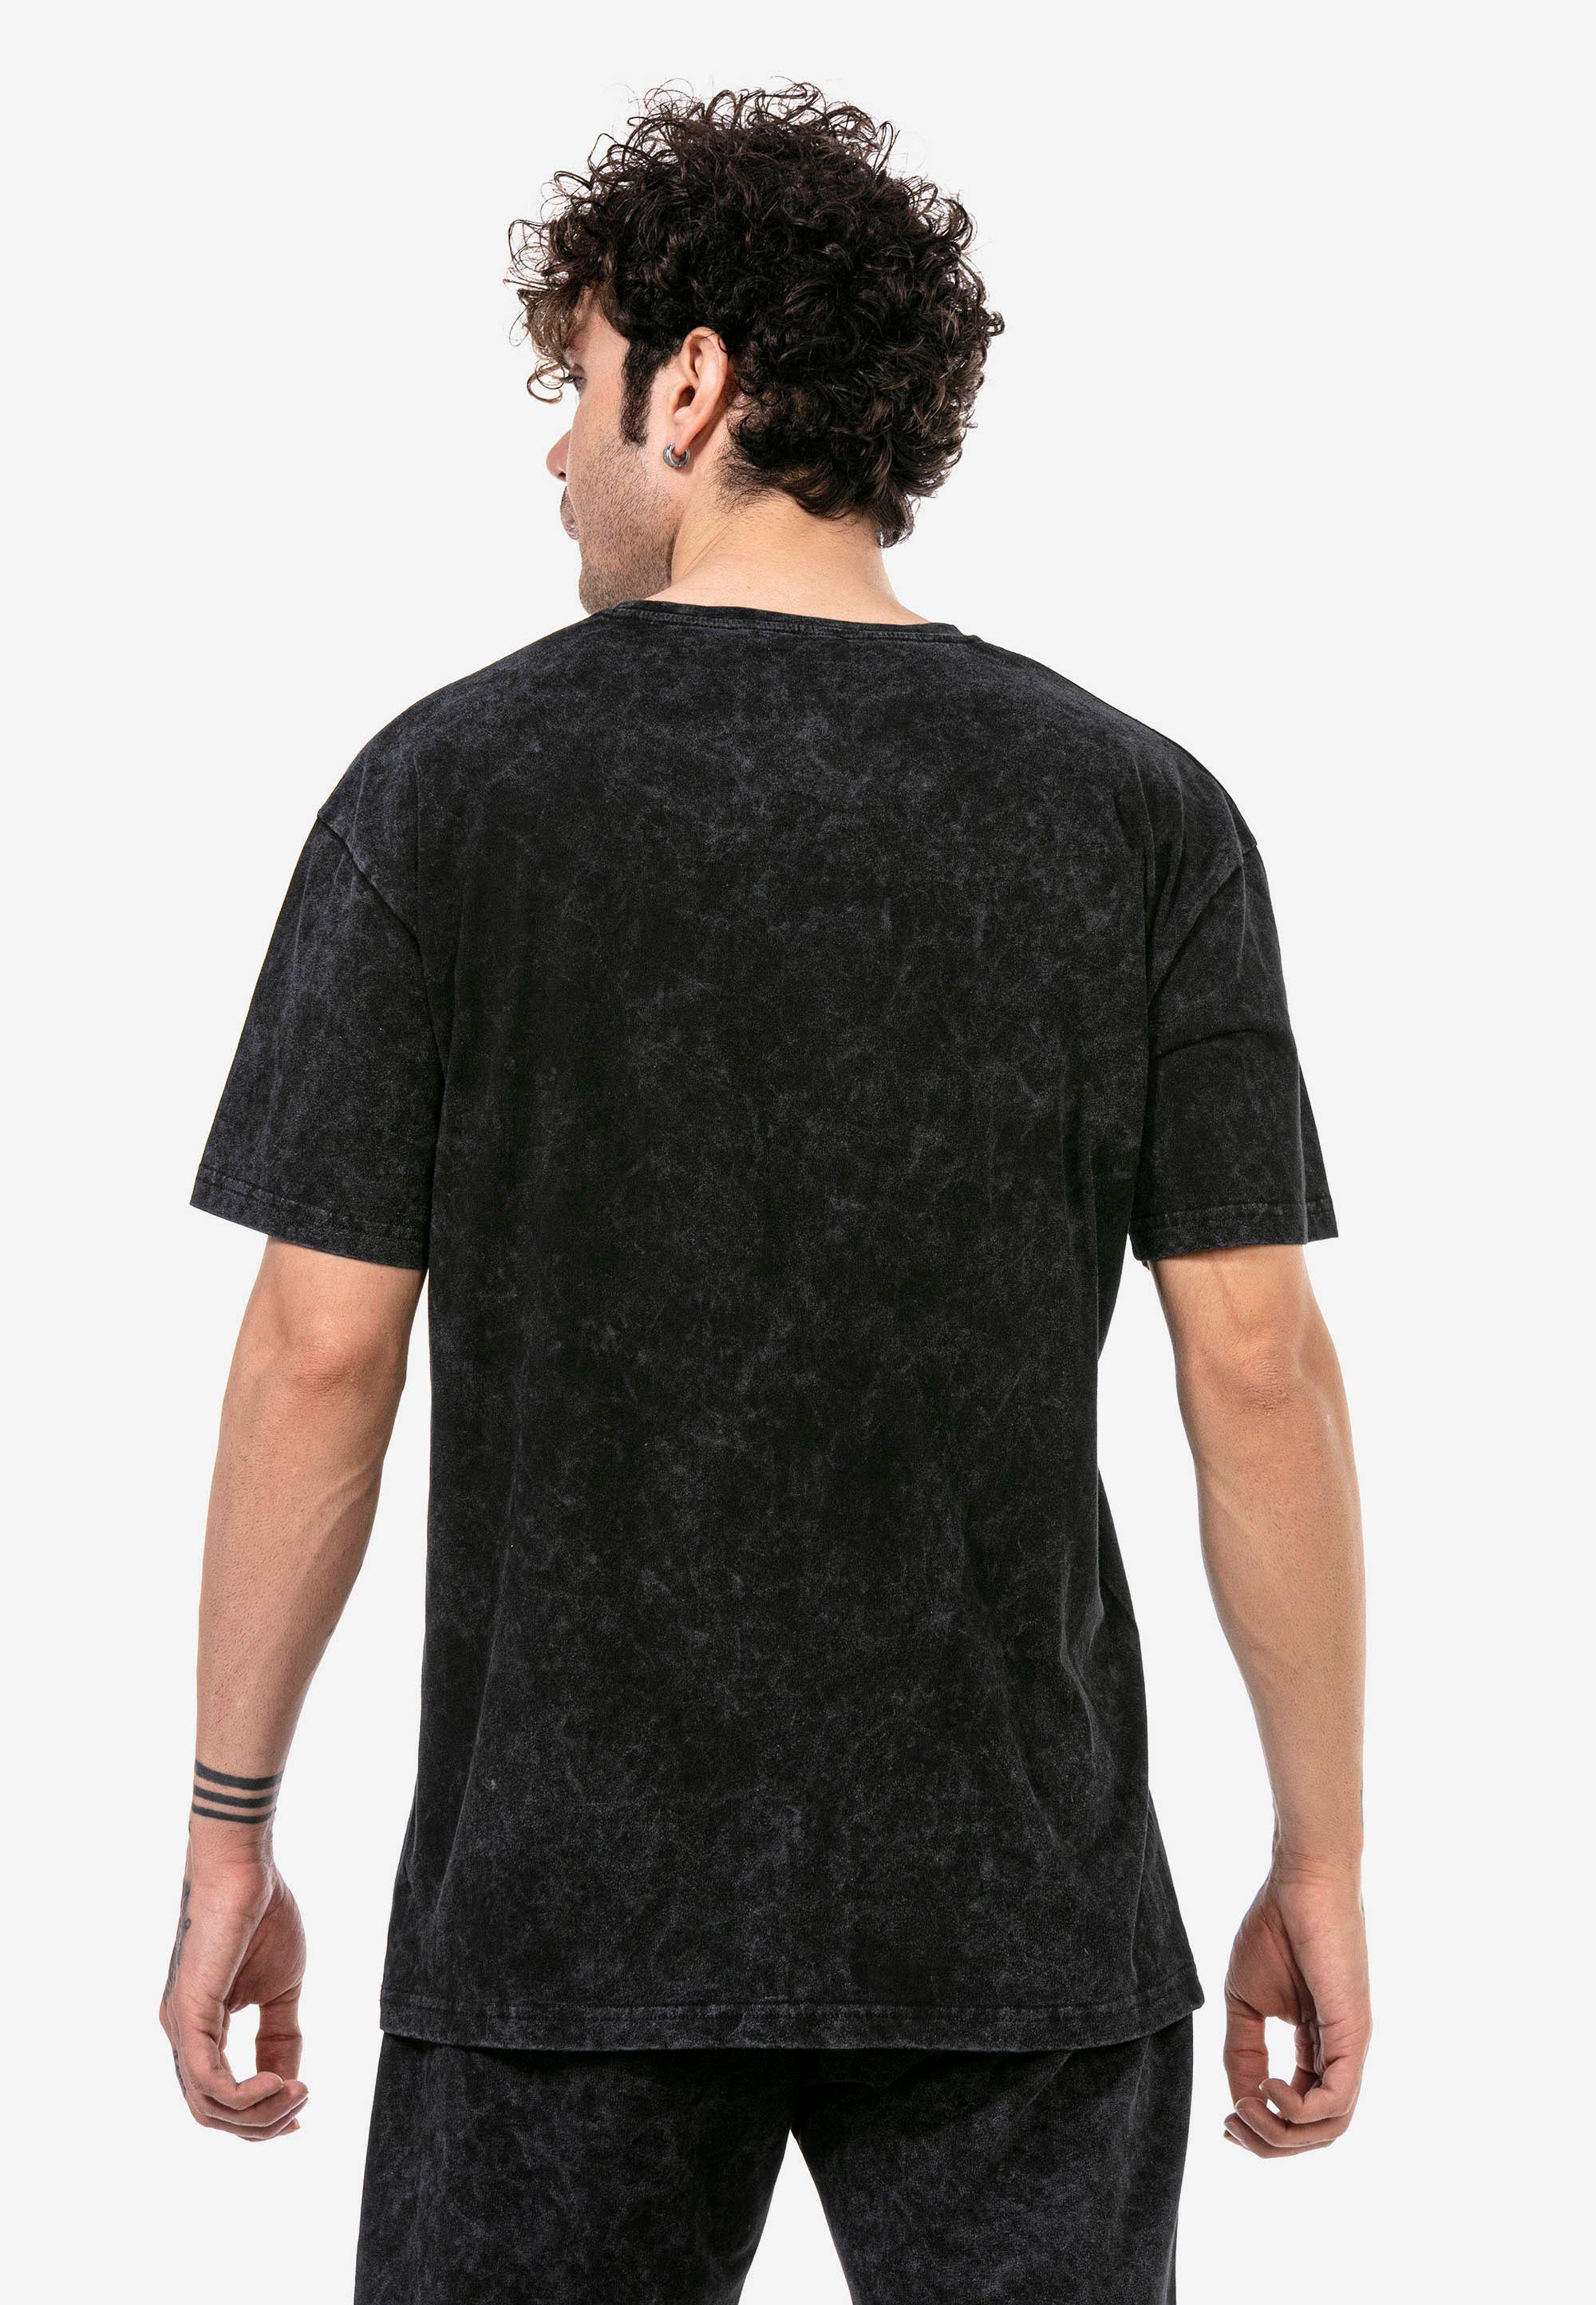 RedBridge Batik-Design T-Shirt in Vista trendigem dunkelgrau